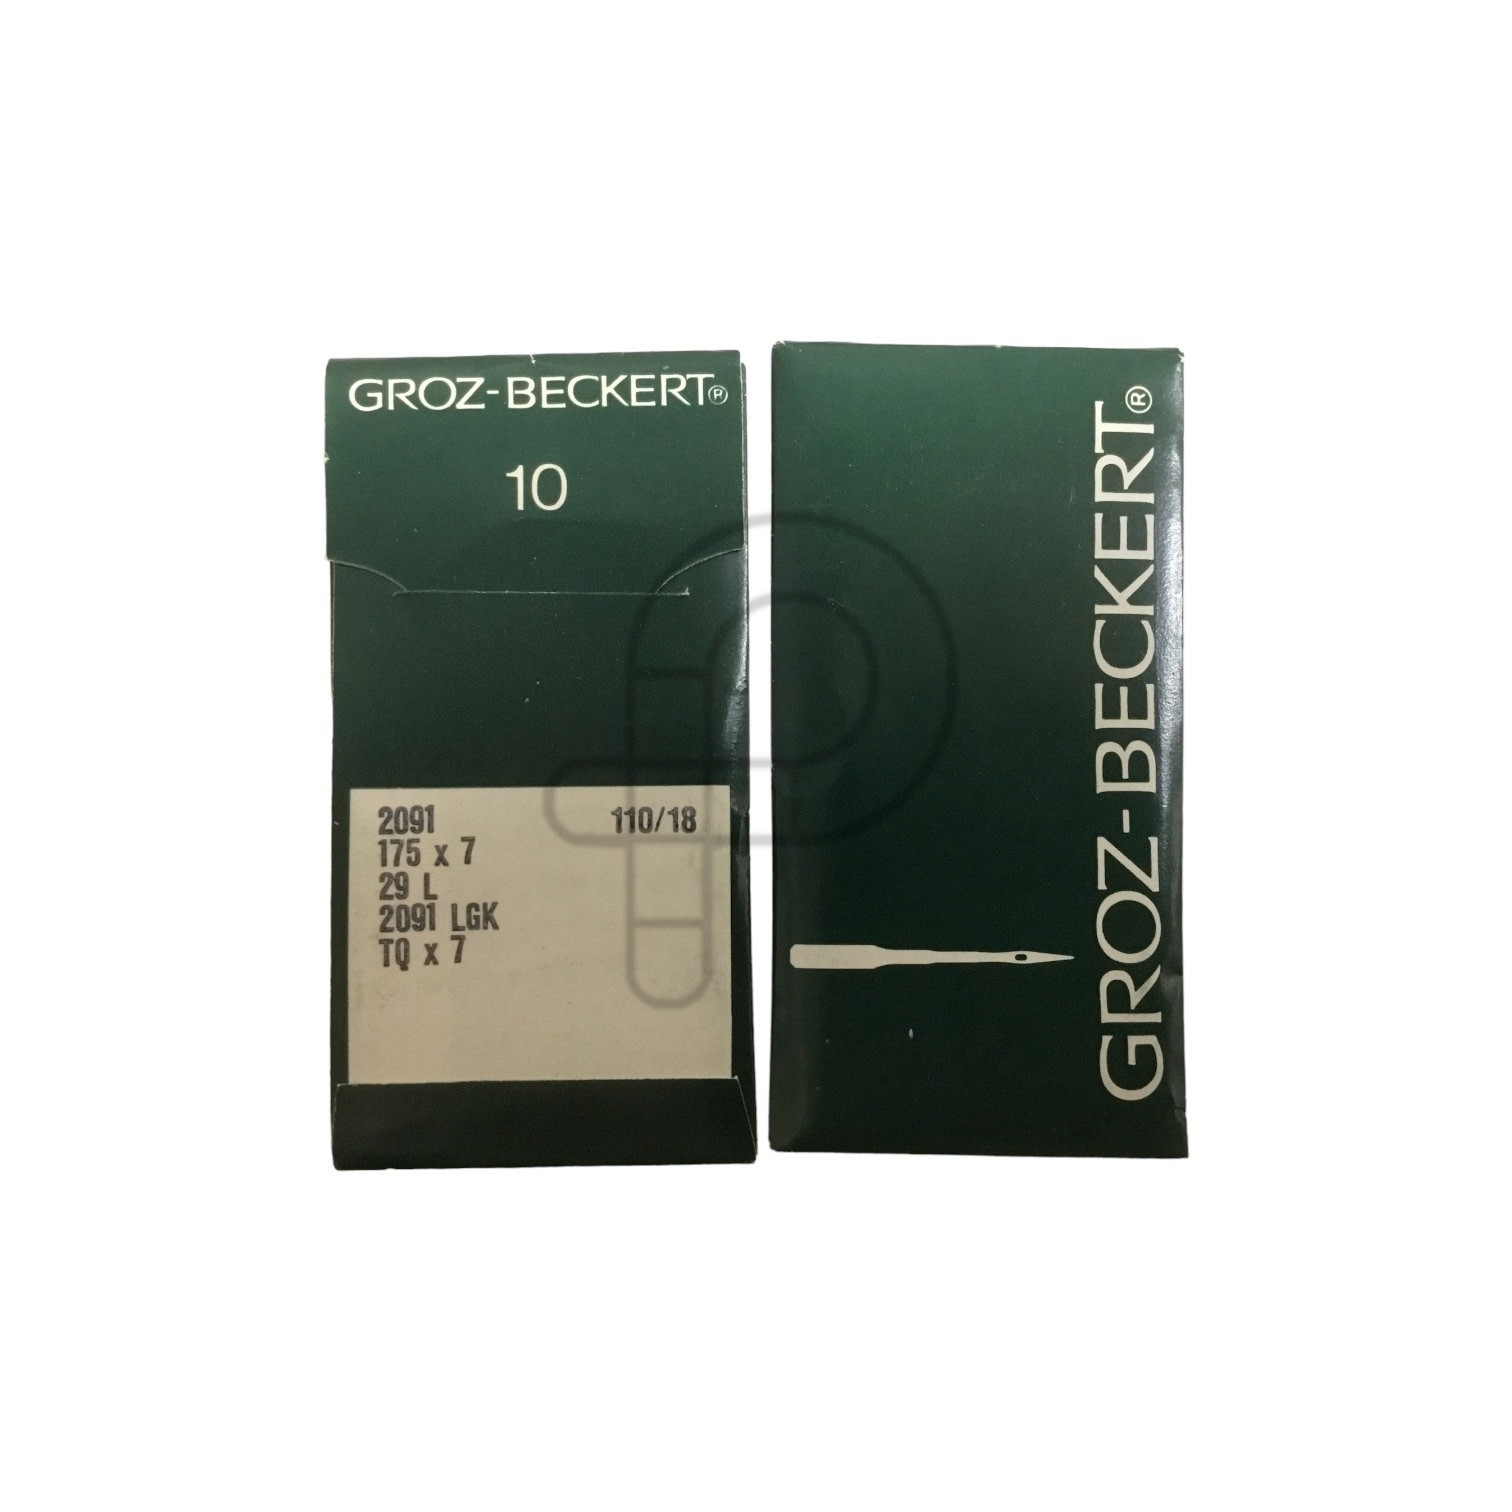 Groz - Beckert Industrial needle 175x7 size 18, pkg 10